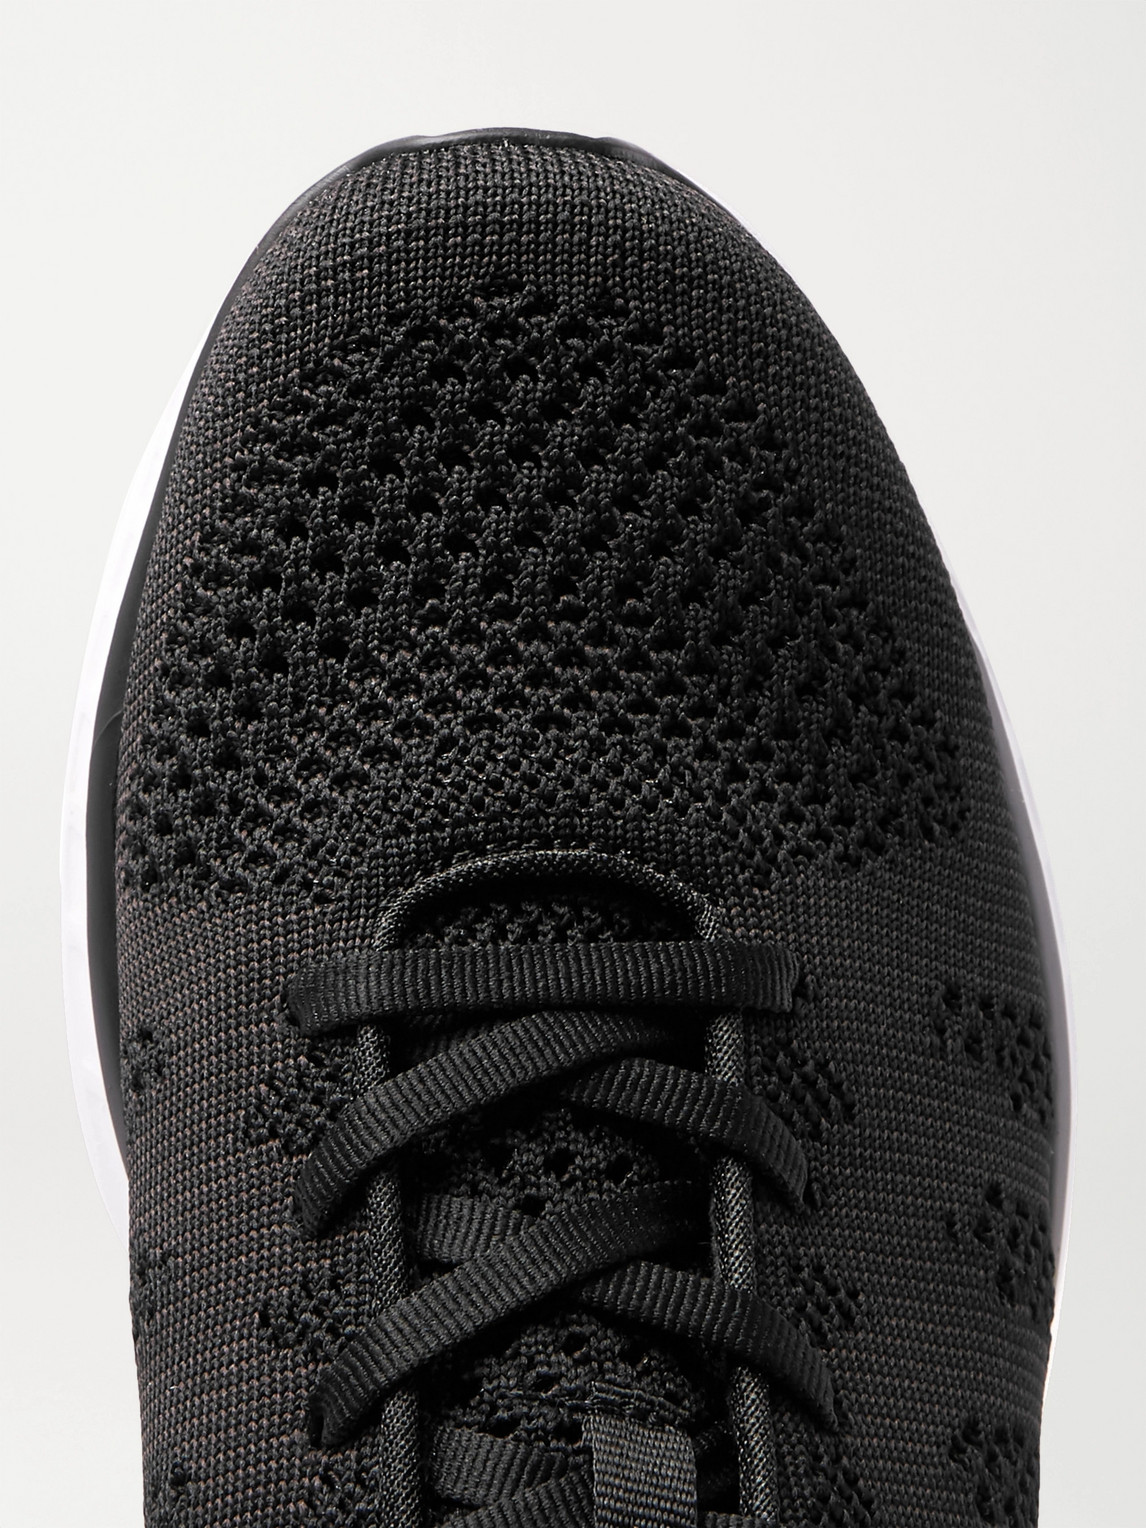 Shop Apl Athletic Propulsion Labs Pro Techloom Running Sneakers In Black